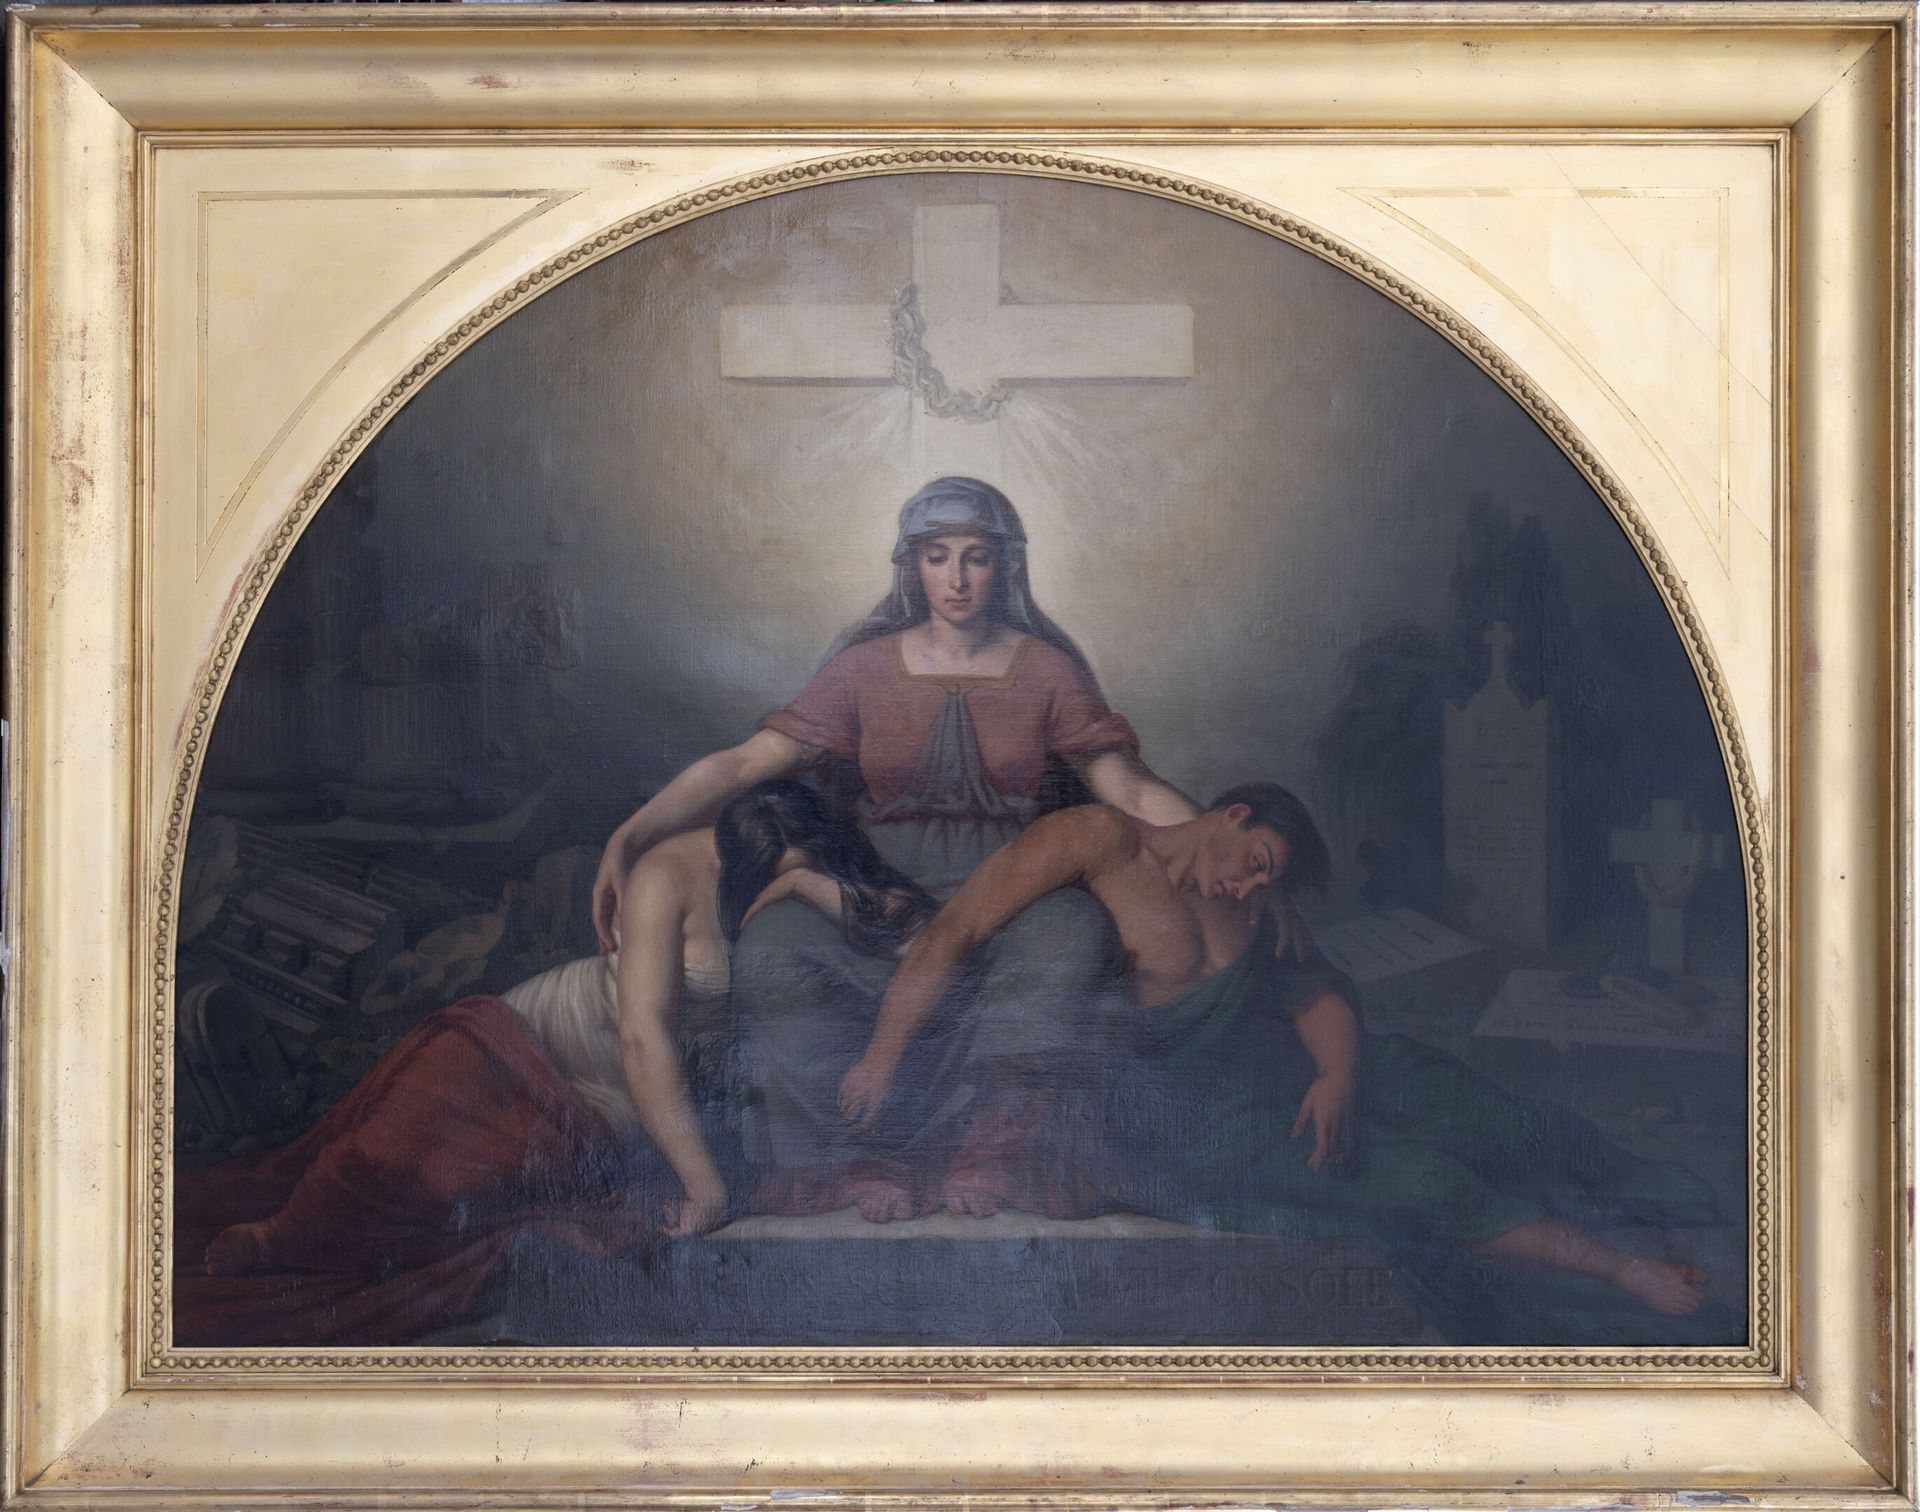 Null 安德烈-雷弗松 (1808-1882)
宗教支持和控制台
布面油画，右下角有签名 
H.98厘米 - 宽135厘米（观看时）HVS
修缮

展览 : &hellip;